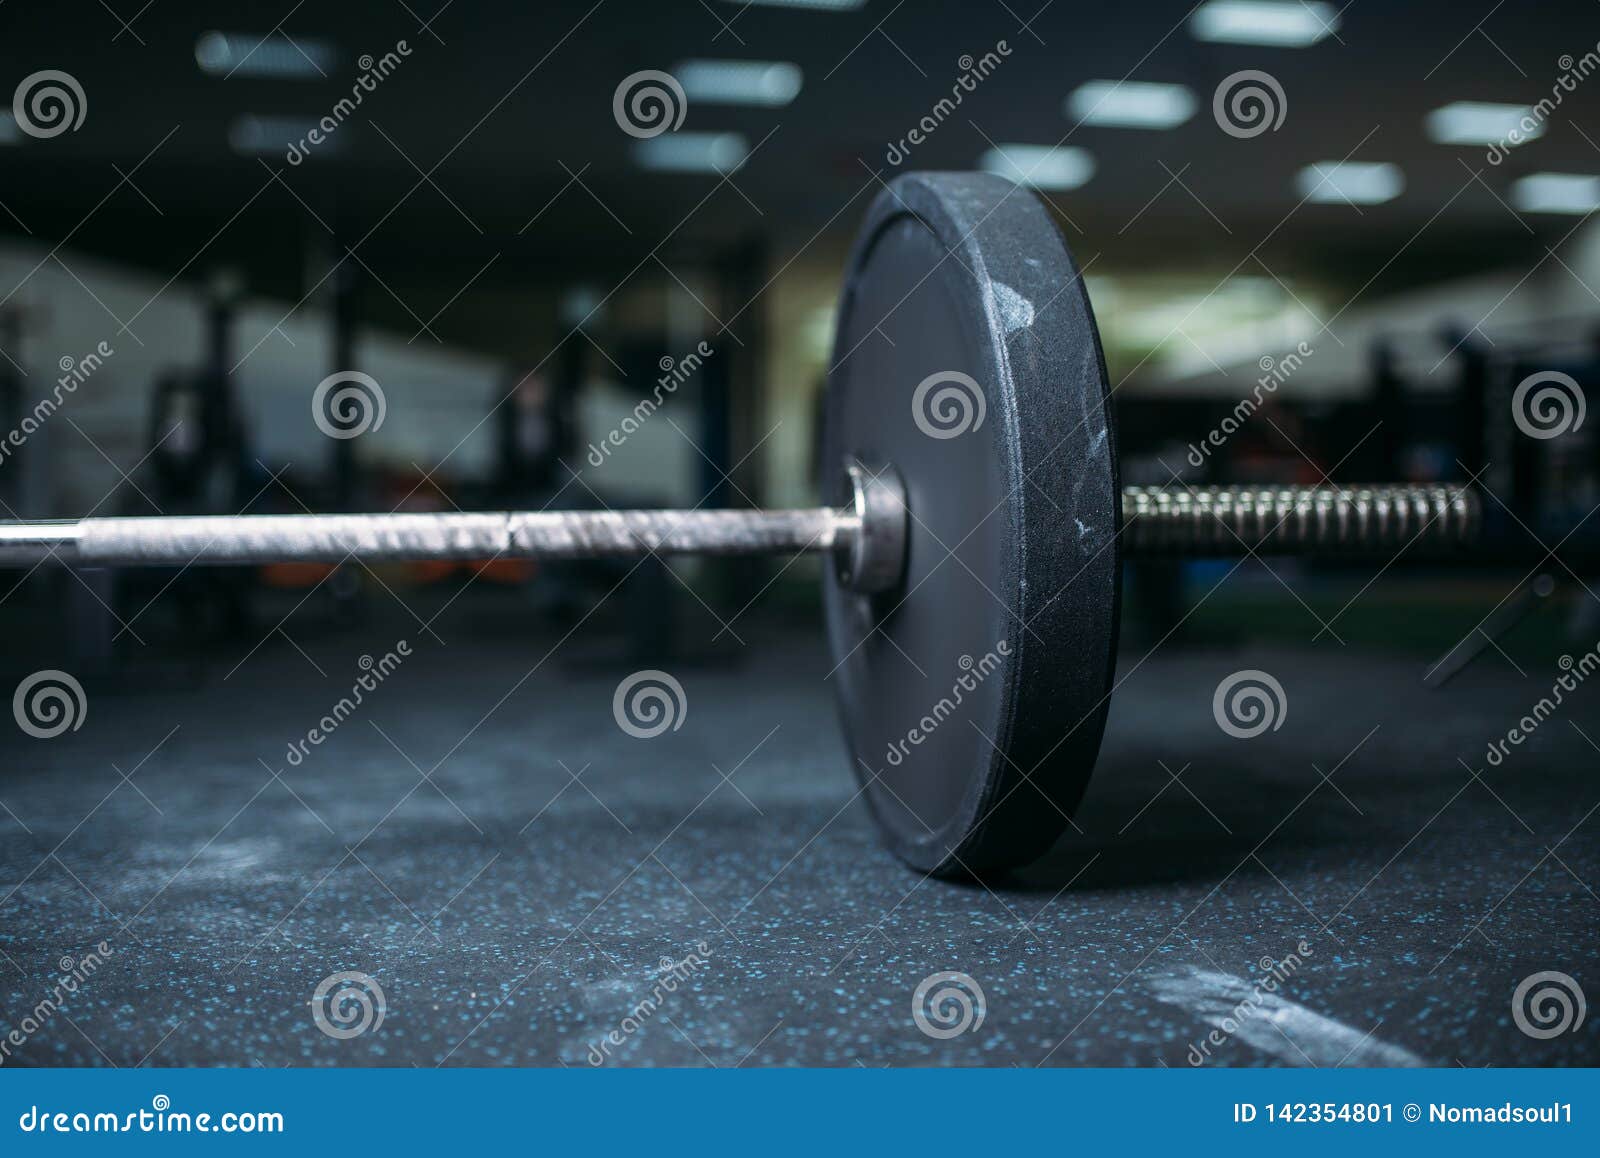 Weight lifting 3. Гантели на полу в спортзале. Штанга на полу. Спортзал пол тяжелая атлетика. Бутафорская штанга.